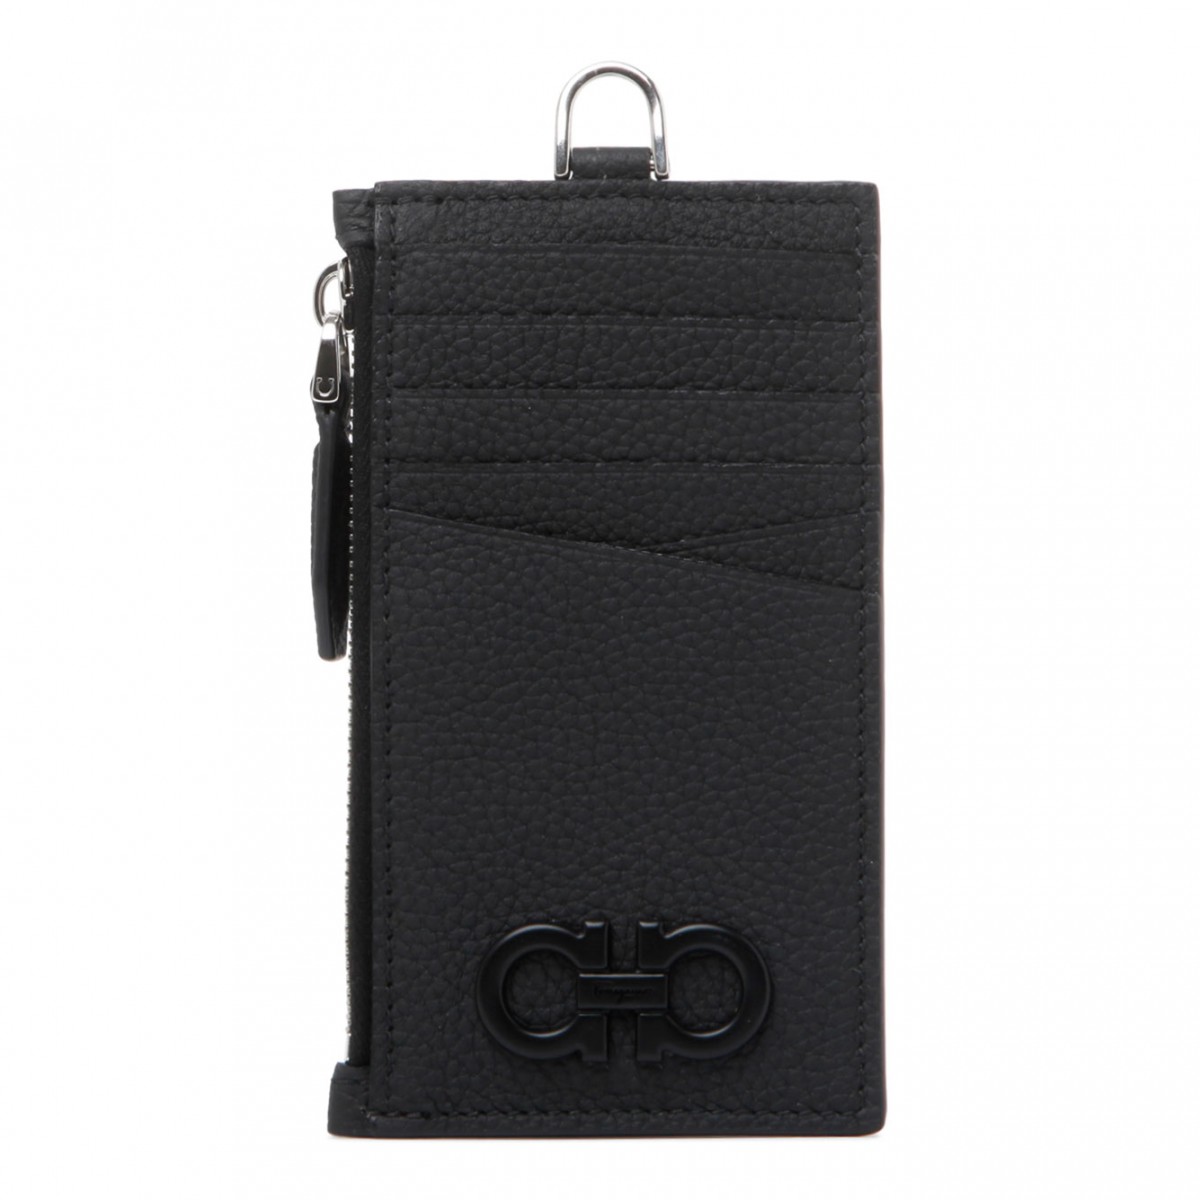 Ferragamo Black Calf Leather Card Holder With Strap. 